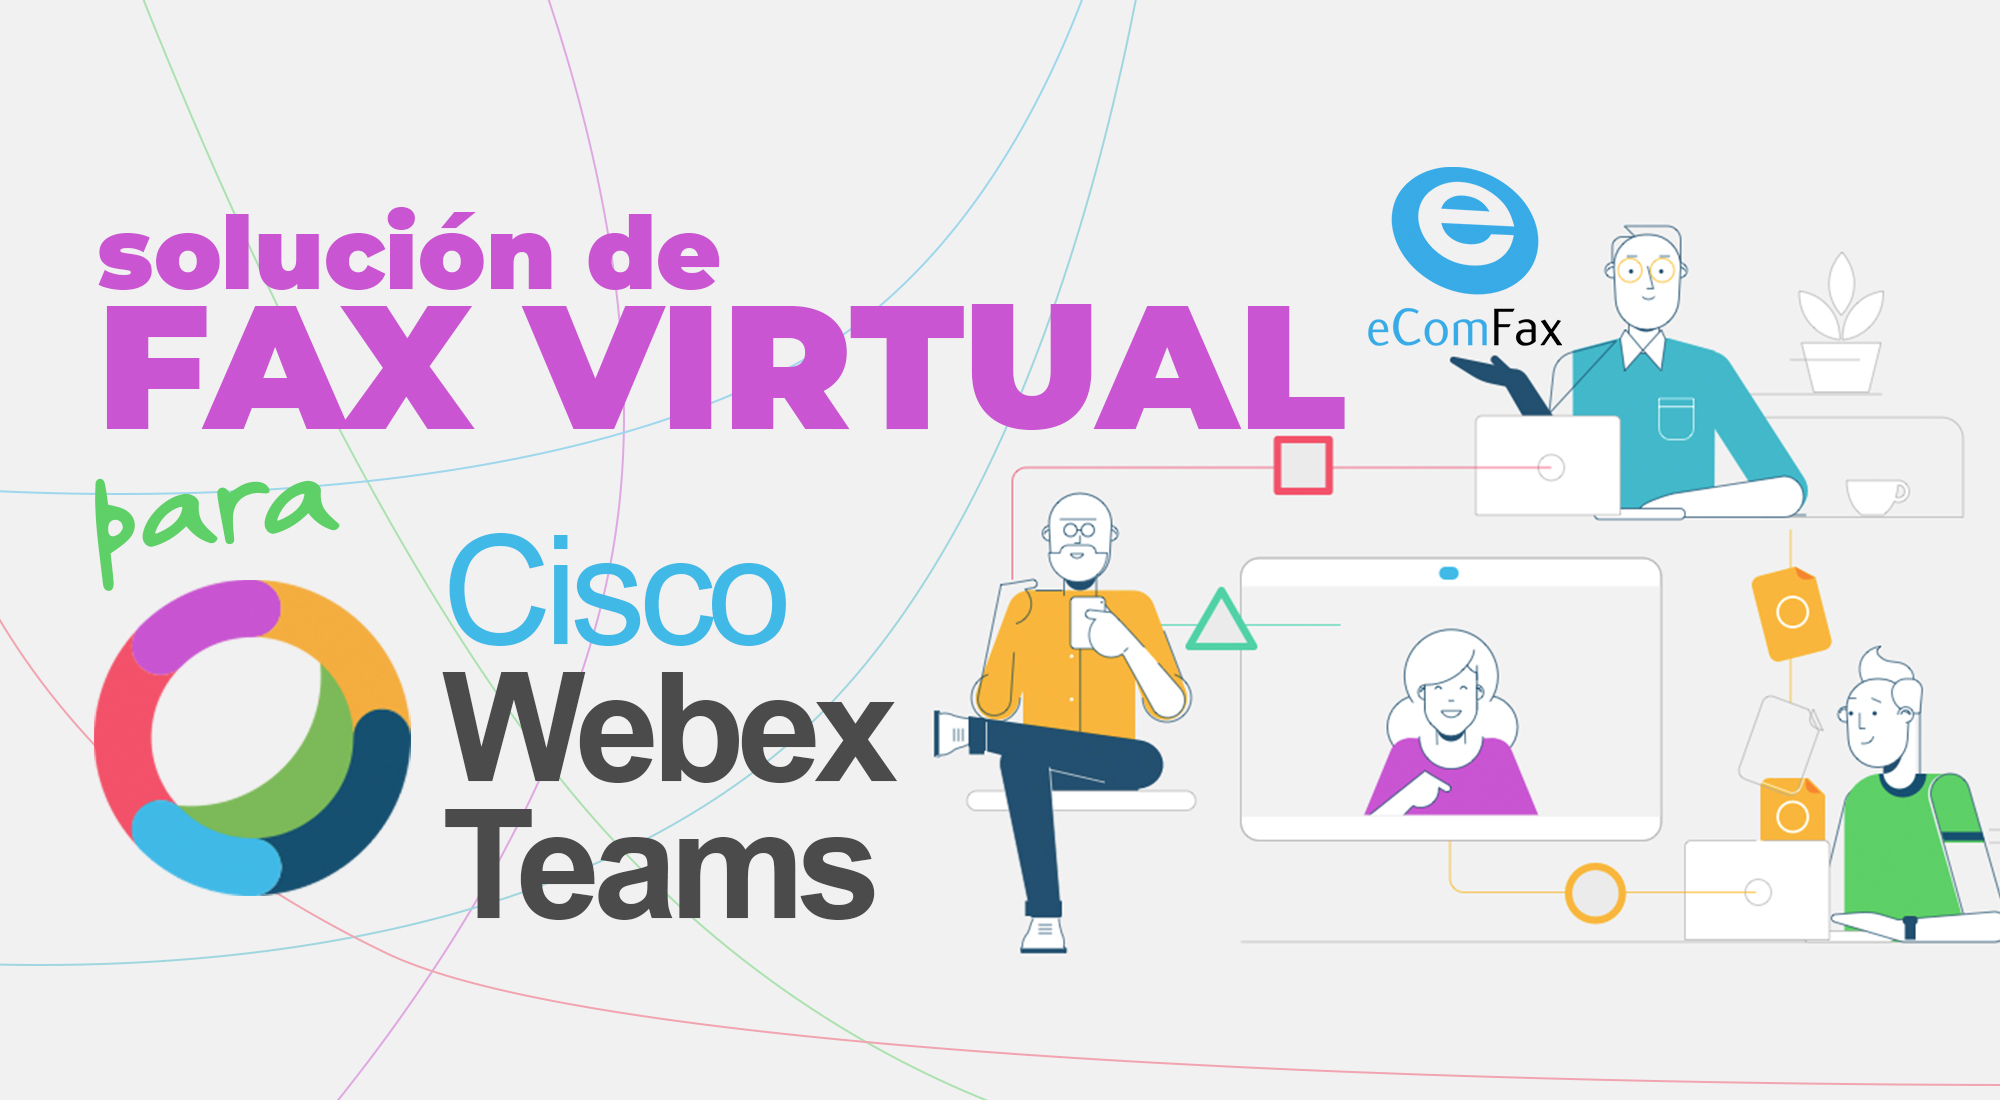 Cisco Webex Teams: enviar y recibir Faxes con eComfax